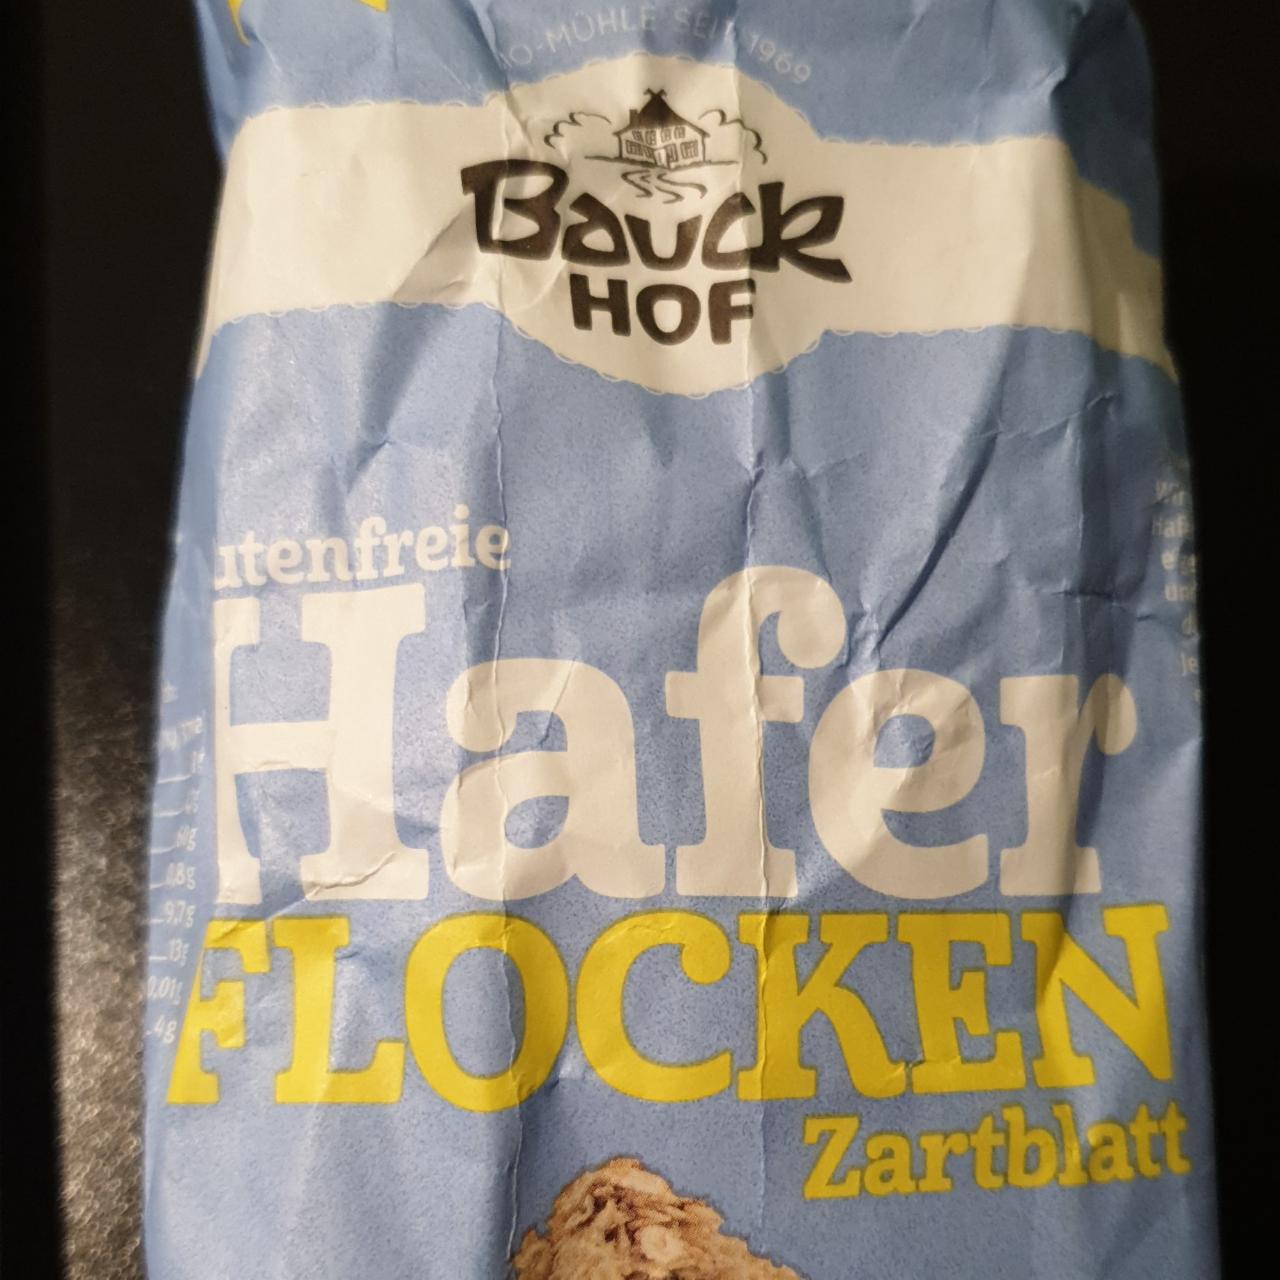 Fotografie - Glutenfreie Hafer flocken Zartblatt Bauck Hof